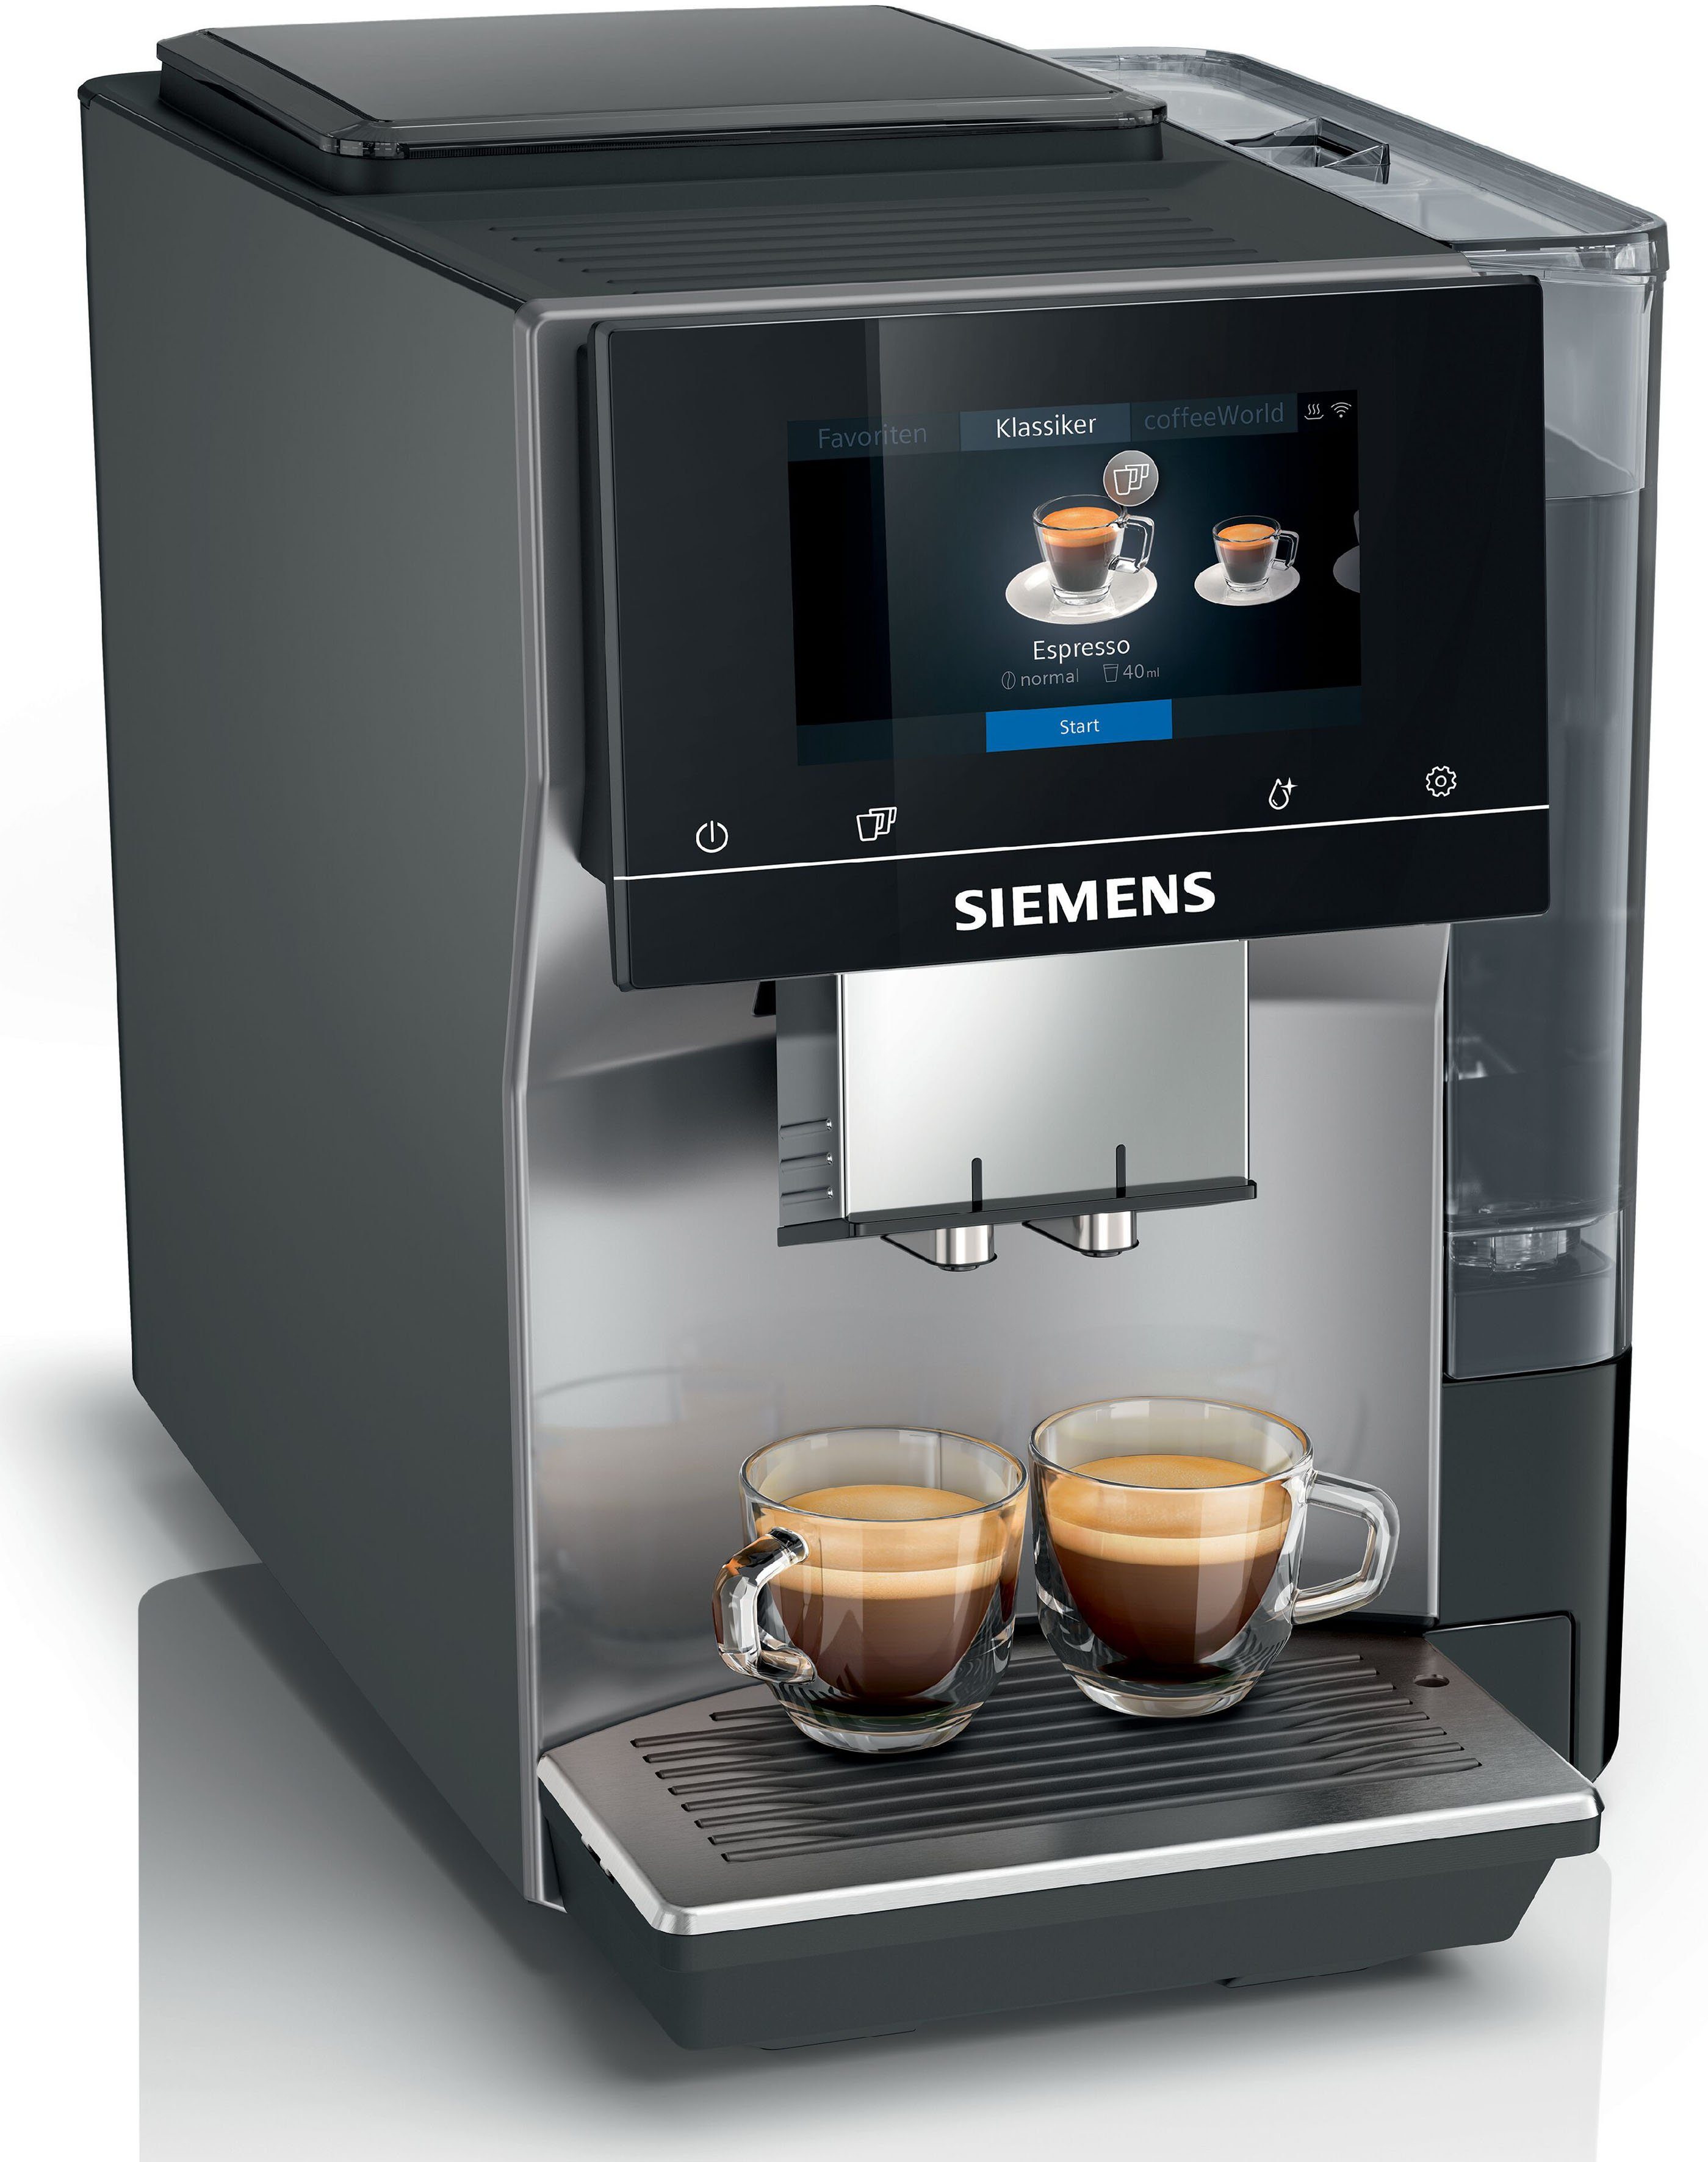 SIEMENS Kaffeevollautomat EQ.700 classic TP705D01, intuitives Full-Touch-Display, automatische Milchsystem-Reinigung | Kaffeevollautomaten